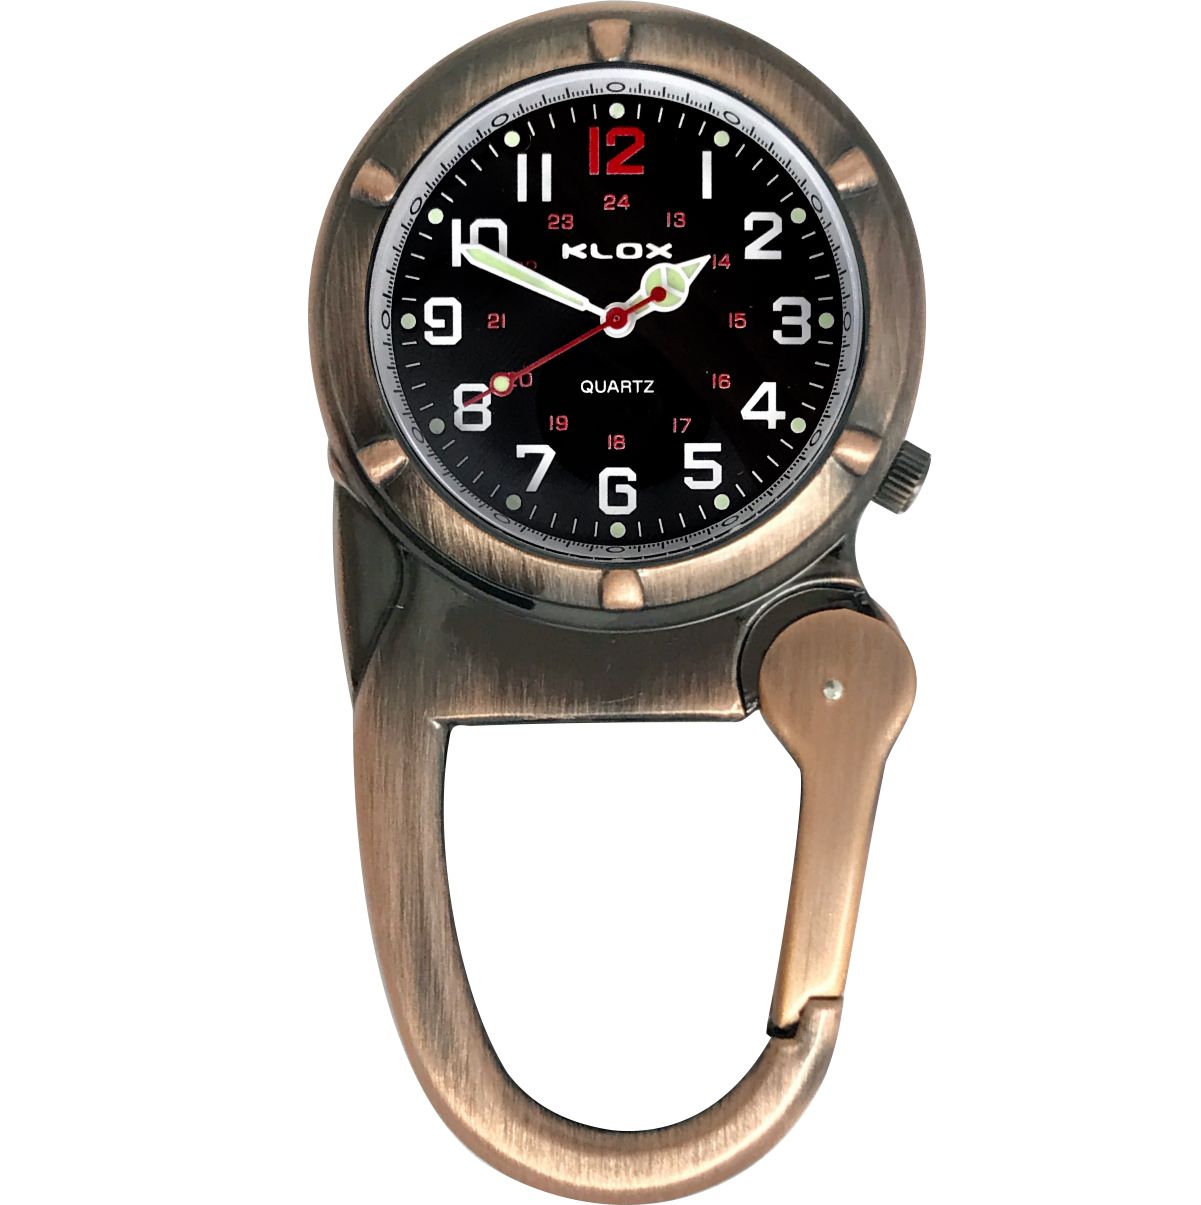 Metal Carabiner Clip Watch - COPPER - BLACK Dial